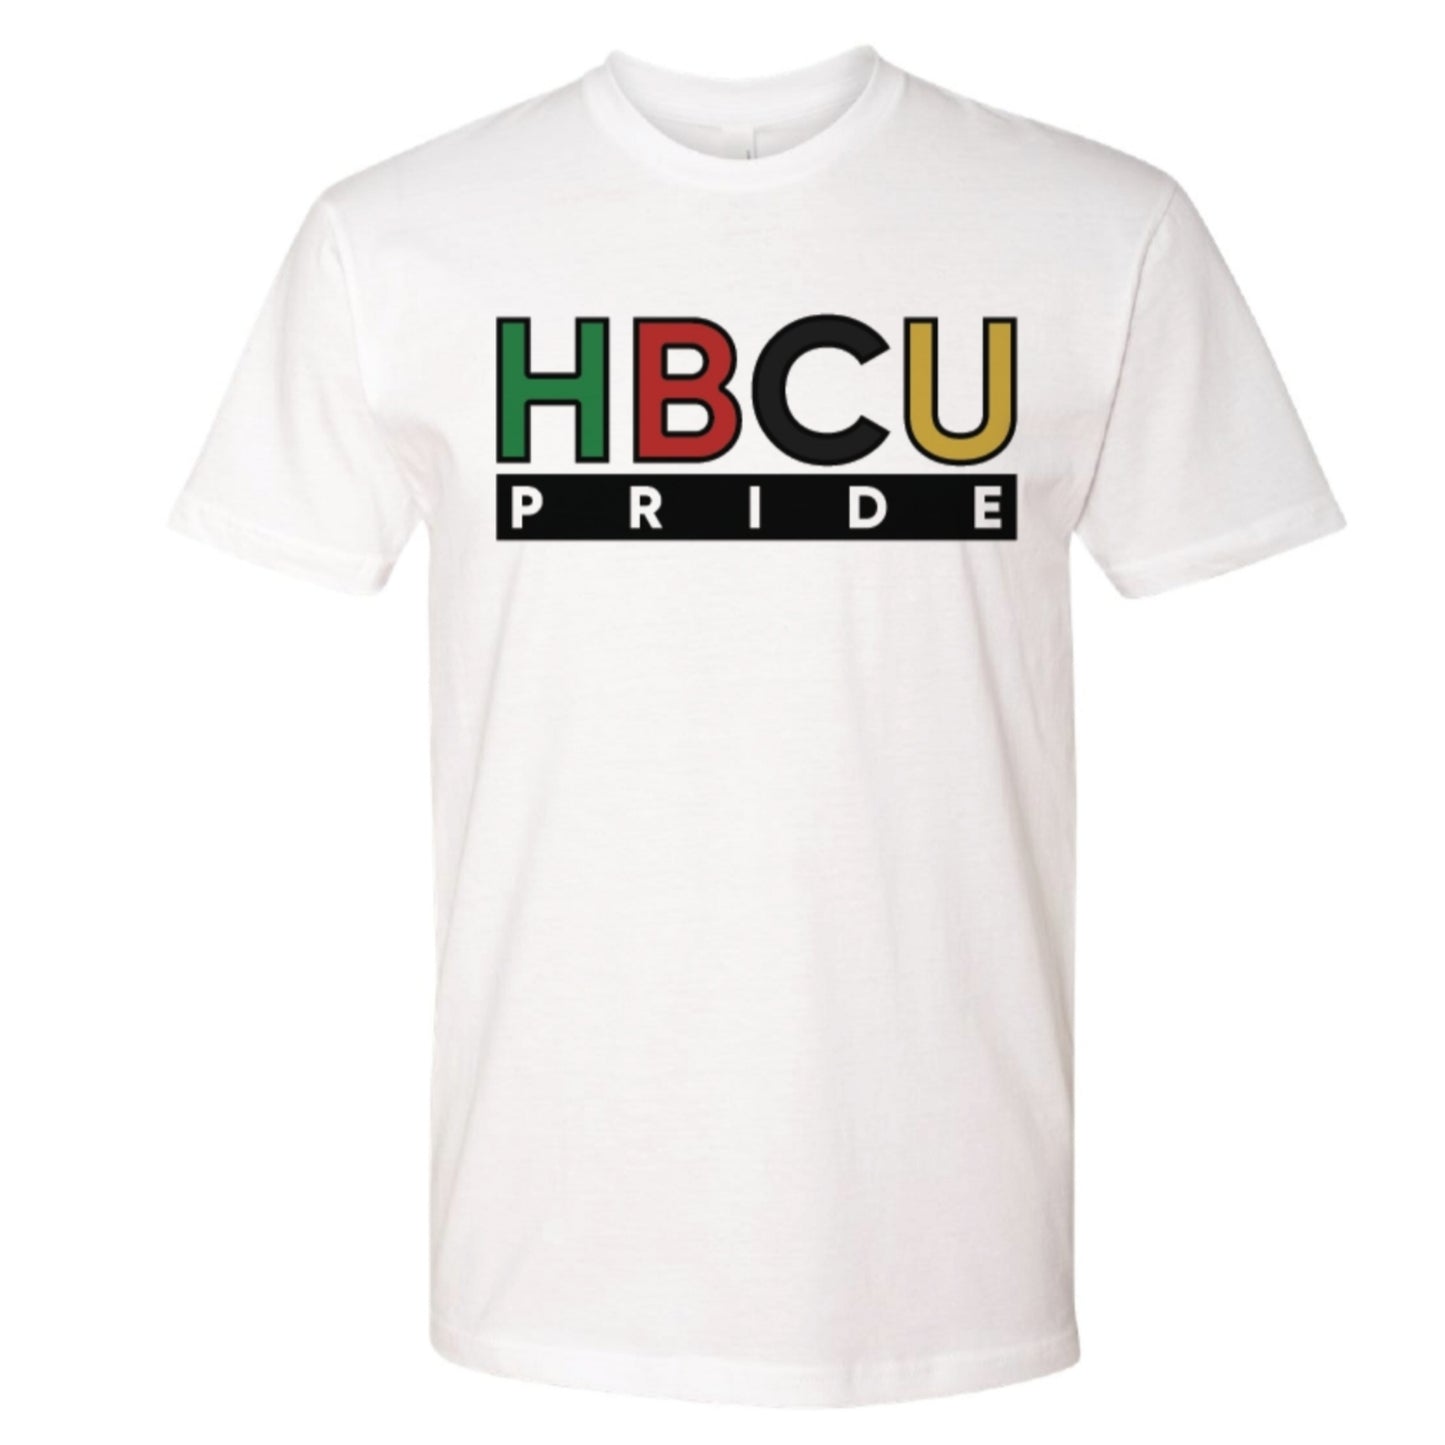 HBCU Pride Tee in White